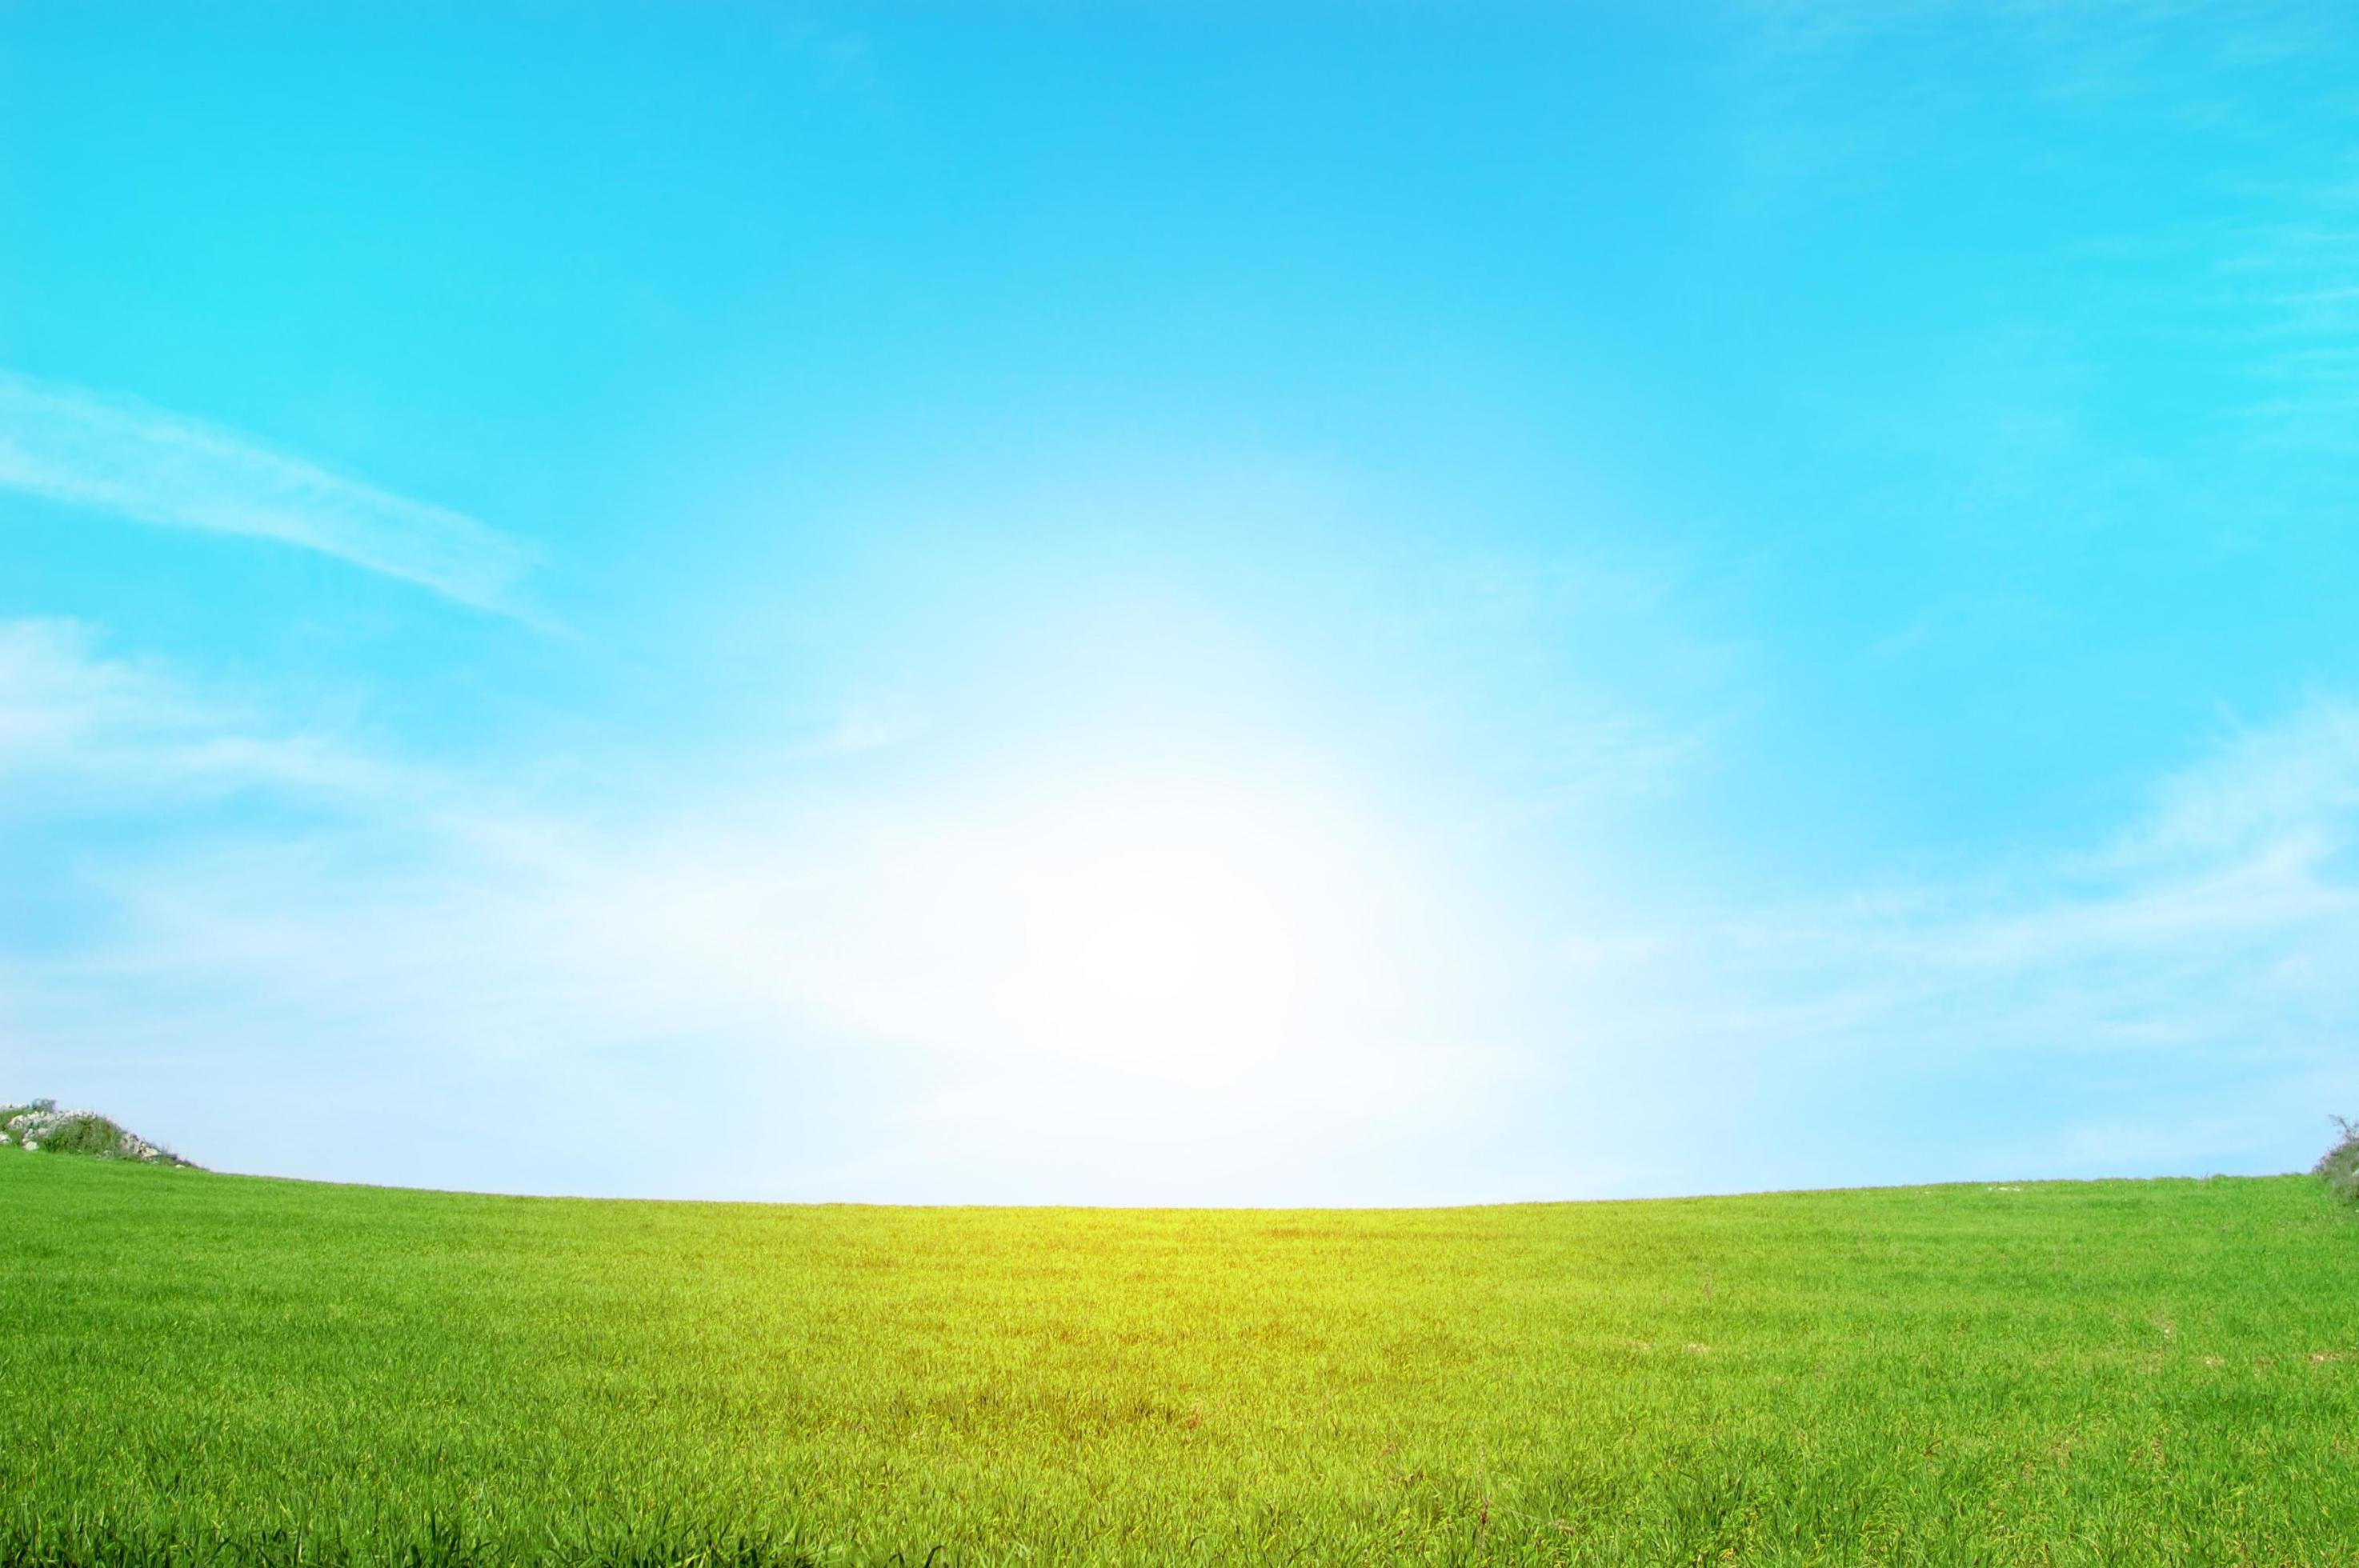 Landscape  green grass on blue sky background New peaceful desktop  wallpaper  green grass on blue sky background  CanStock